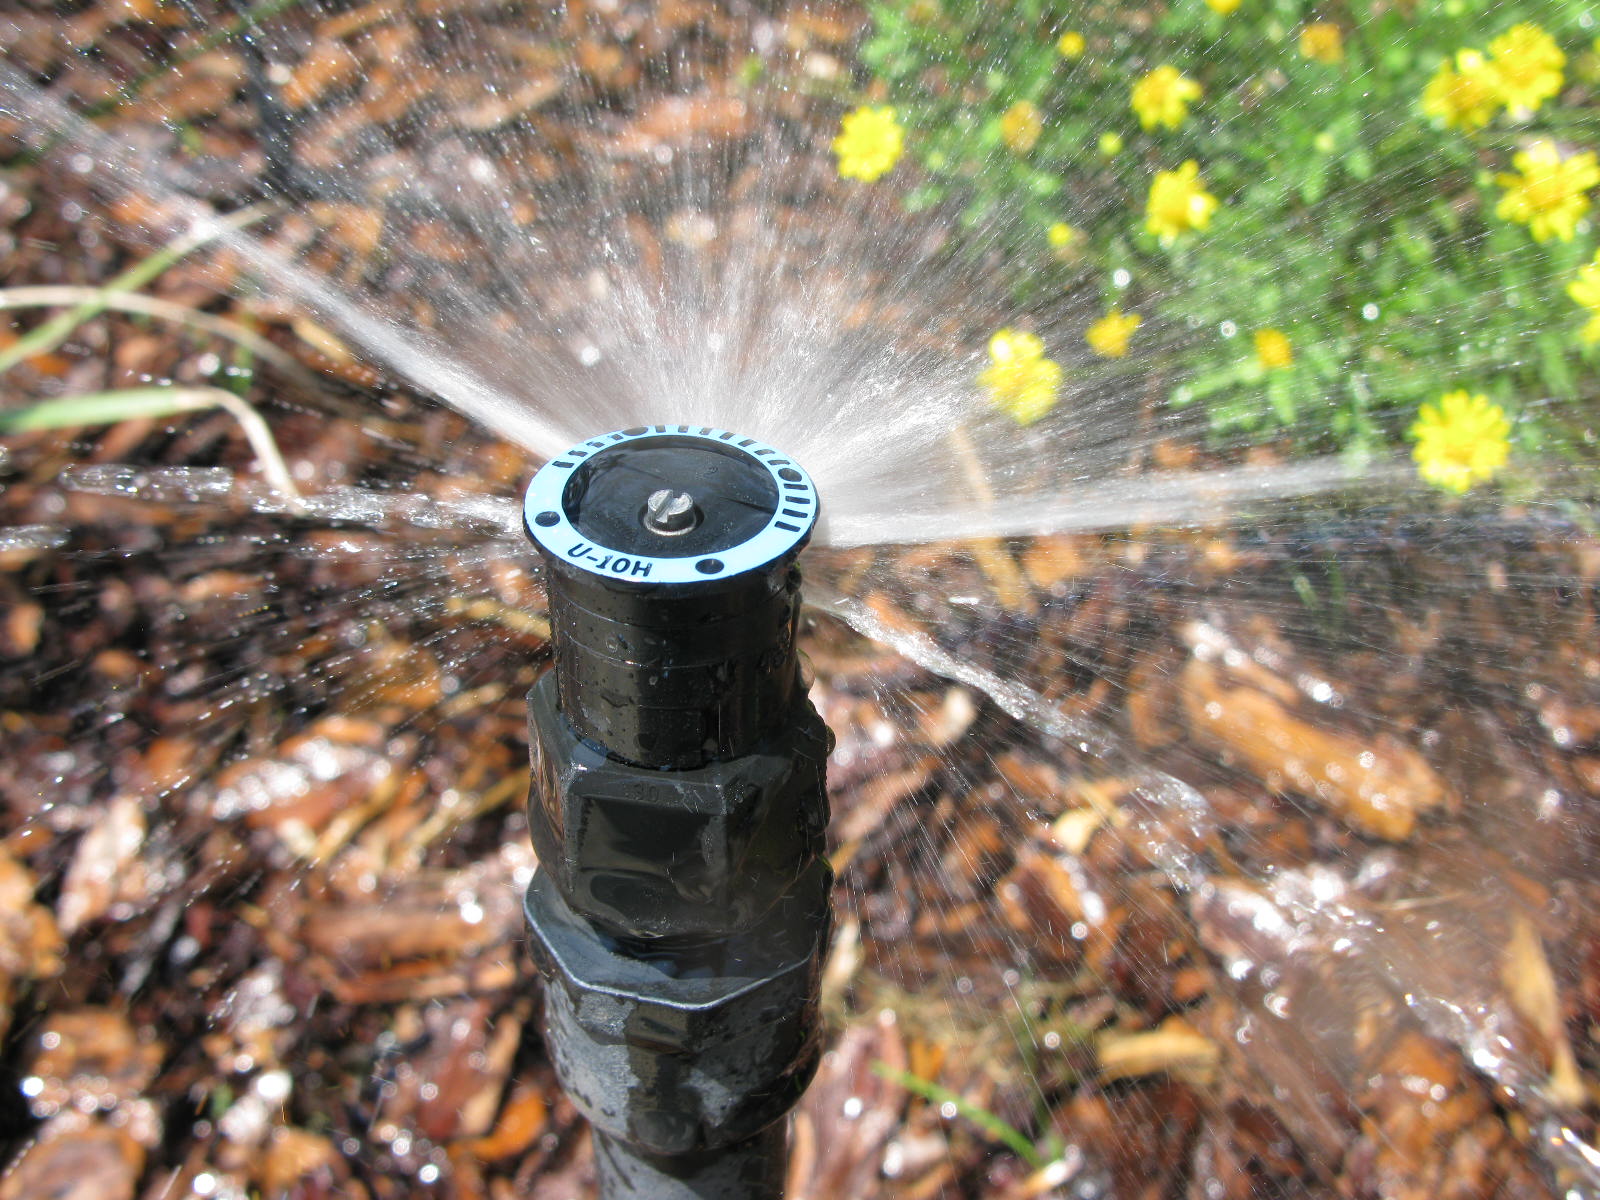 http://www.pro-sprinkler.com/wp-content/uploads/2011/07/Rainbird-undercut-nozzles-sprinkler-irrigation-system.jpg